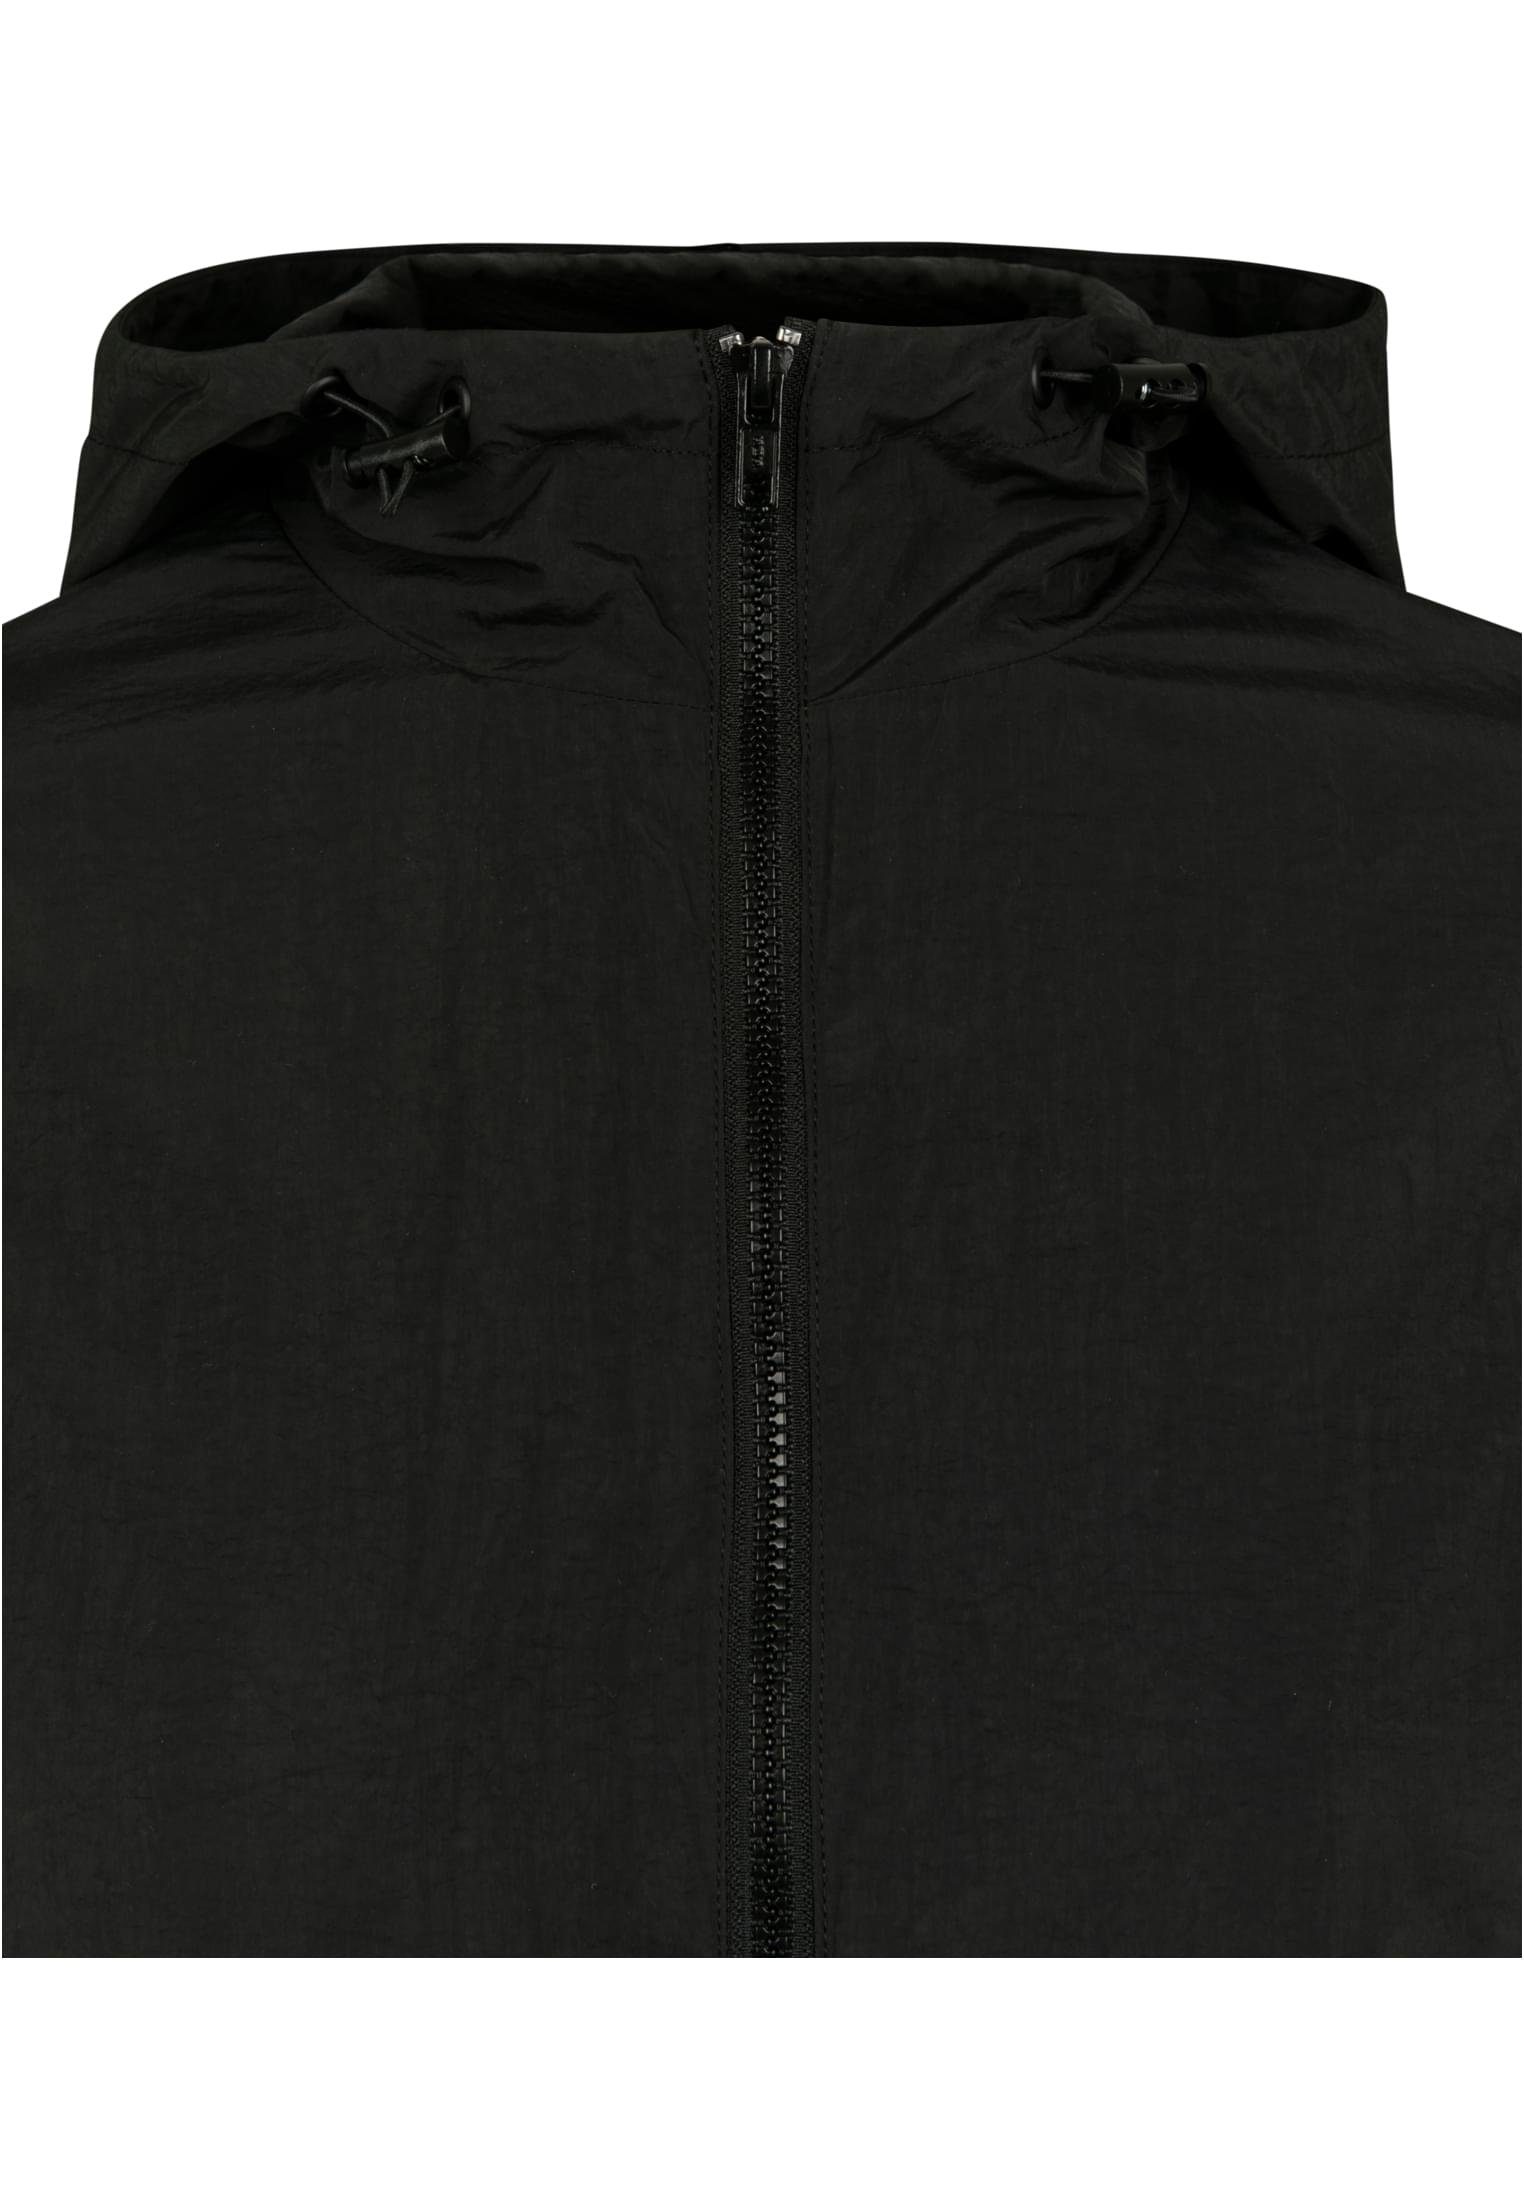 URBAN (1-St) Ladies Crinkle Jacket Damen CLASSICS black/white Outdoorjacke Batwing